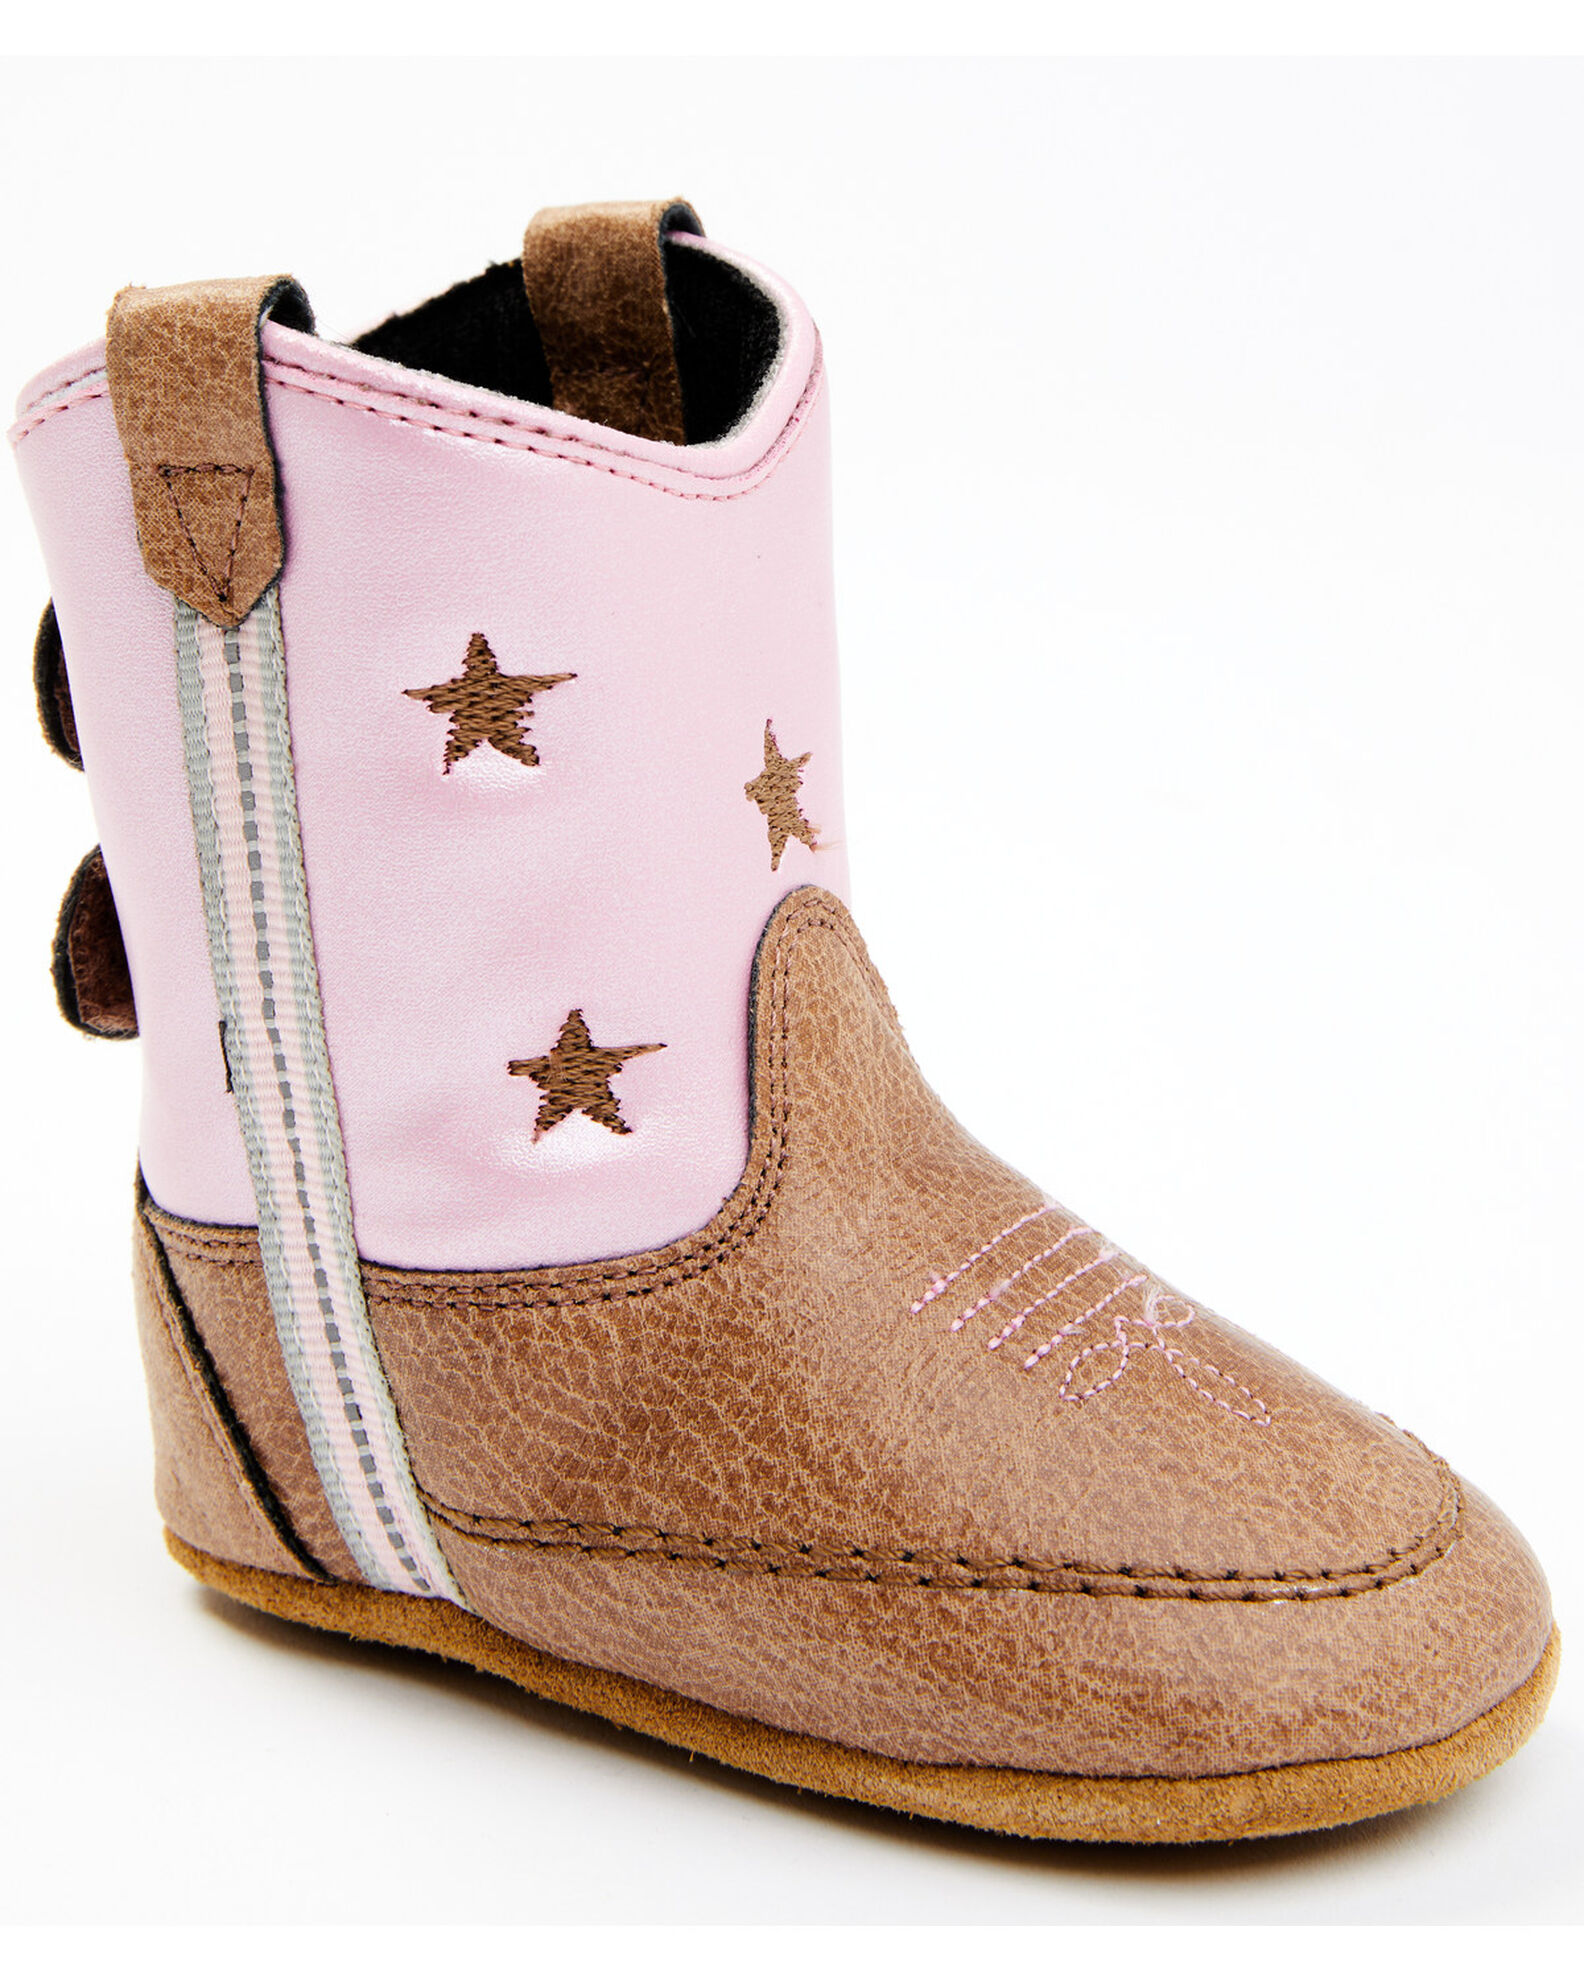 Shyanne Infant Girls' Poppet Little Star Western Boots - Round Toe